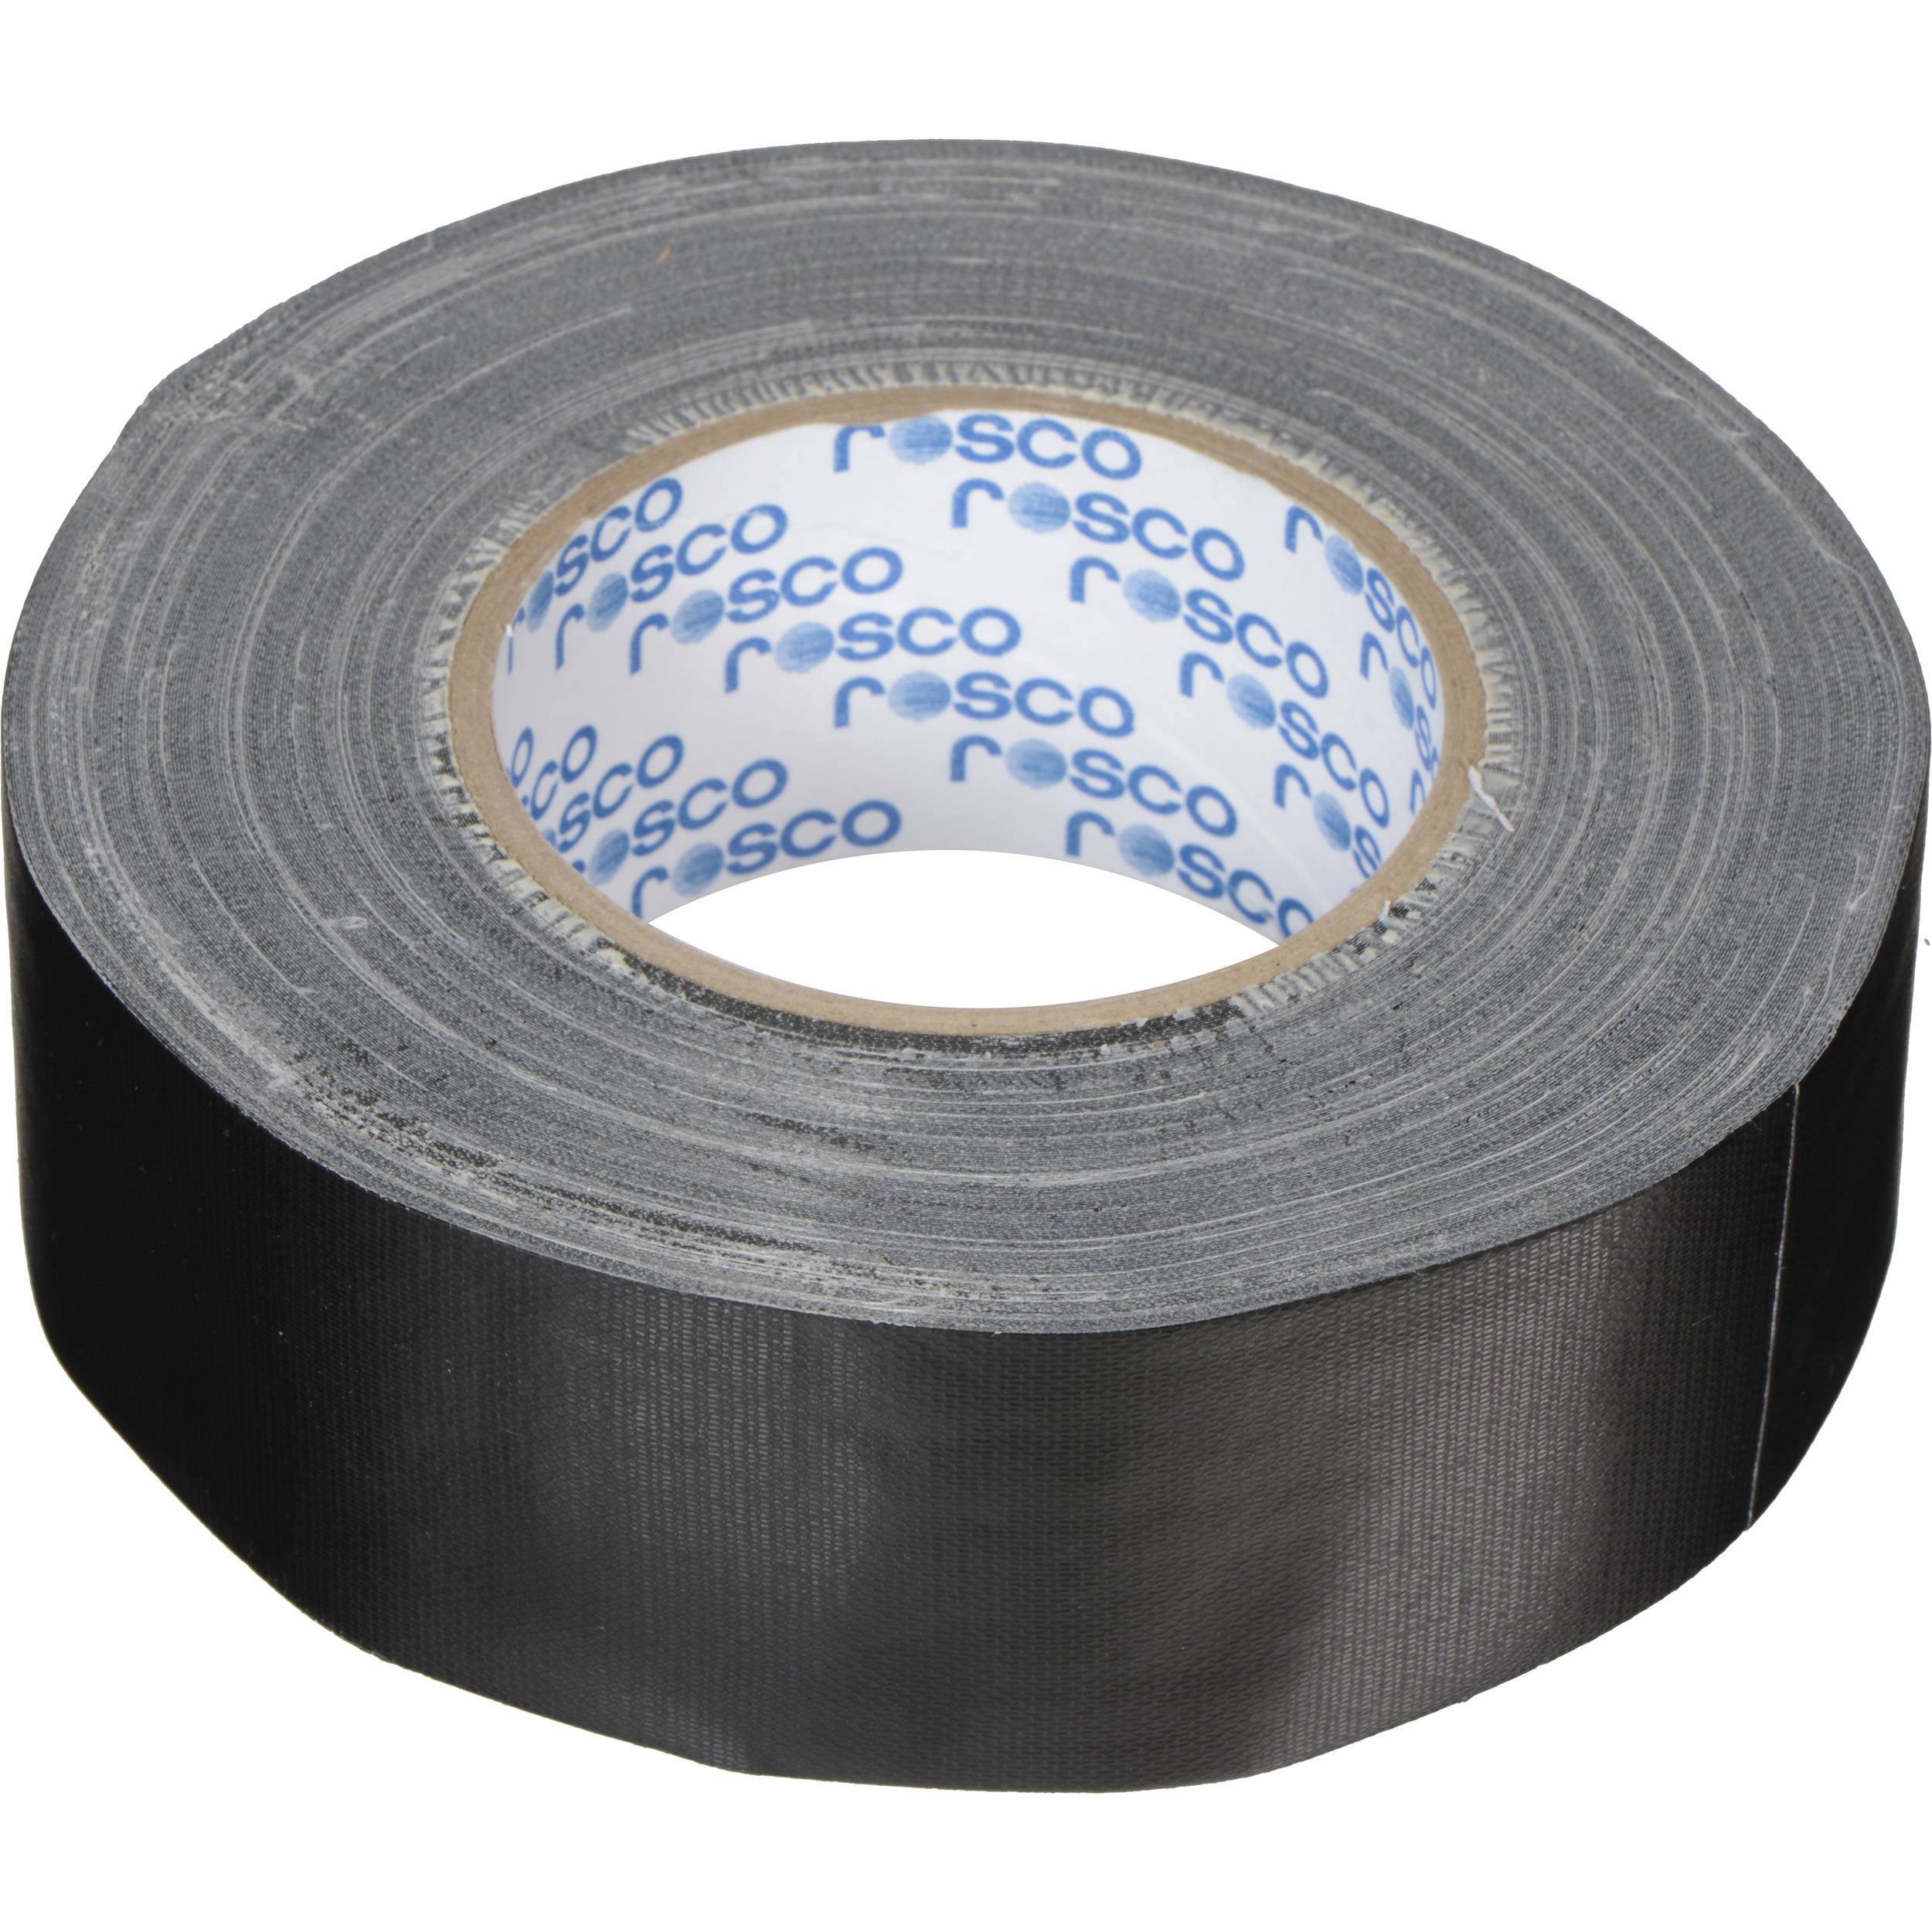 Rosco GaffTac Gaffer Tape - Black (2